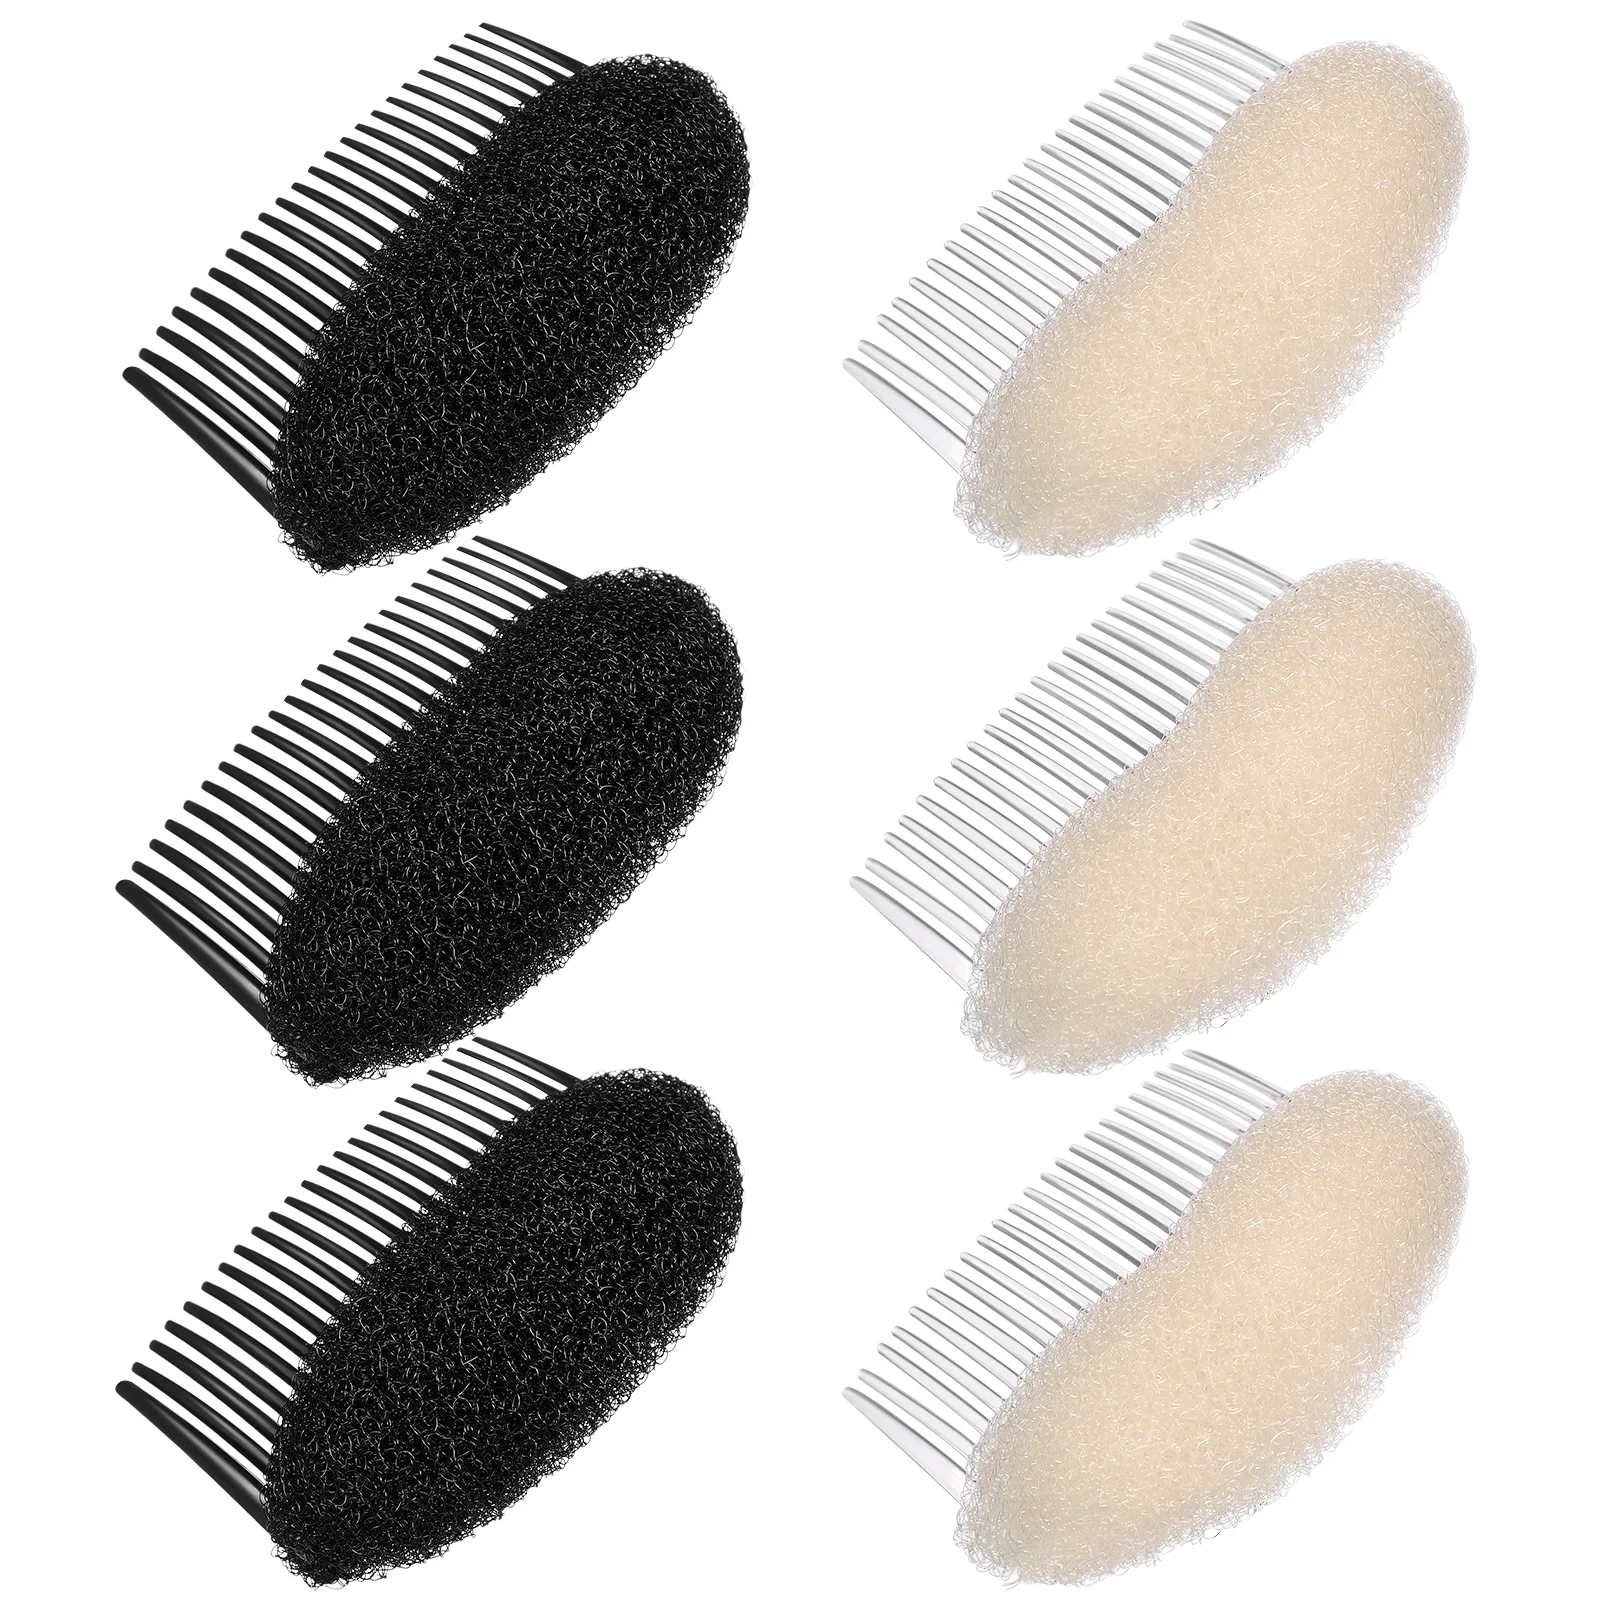 

6 Pieces Volume Hair Base Set Styling Insert Braid Tool Hair Shaper Bump Up Combs Clips Sponge Hair Bun Updo Accessories Hair